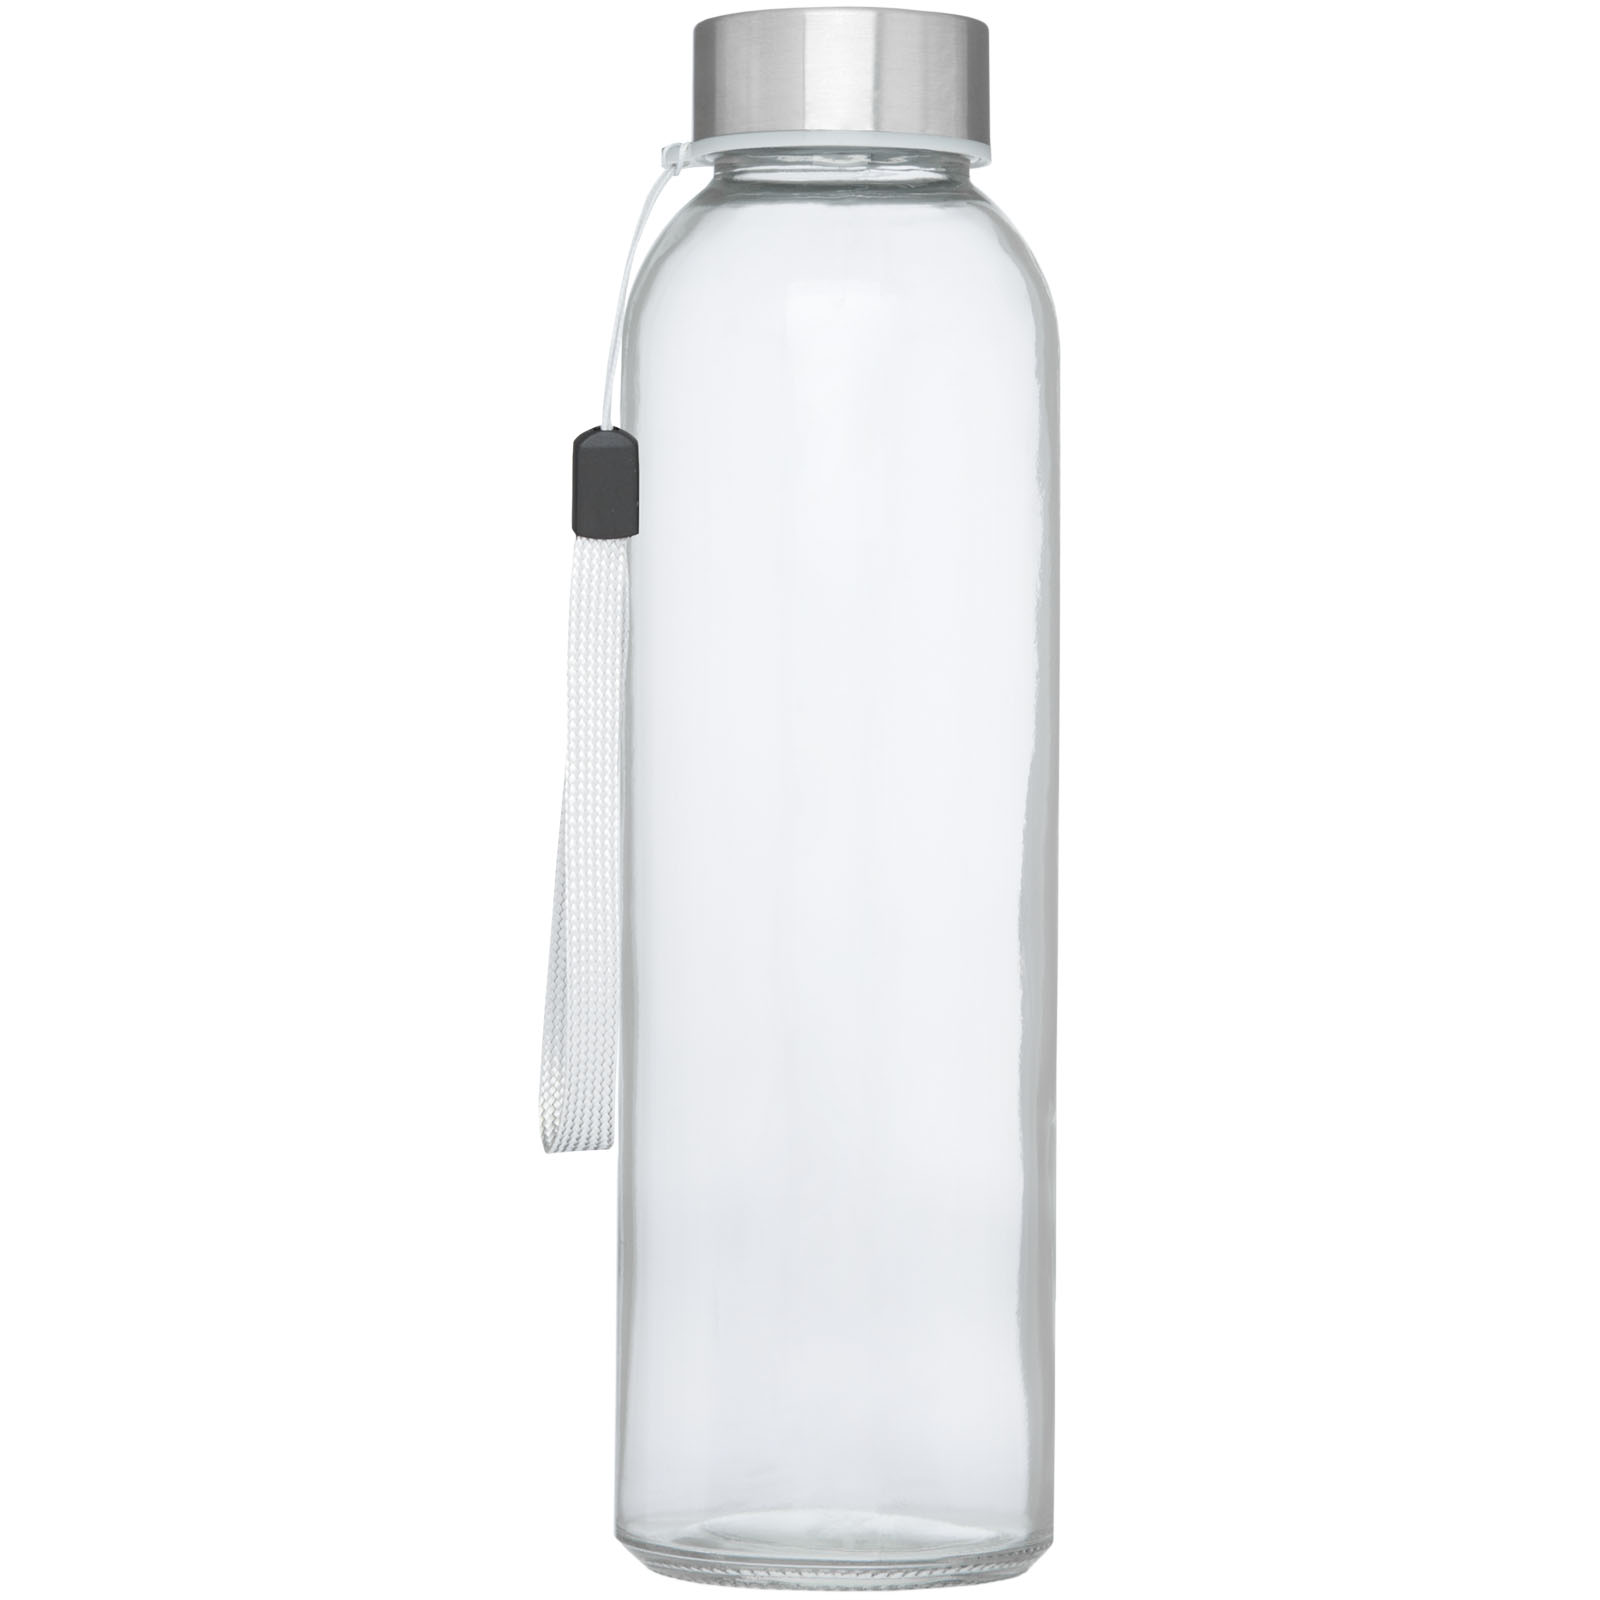 Advertising Water bottles - Bodhi 500 ml glass water bottle - 3